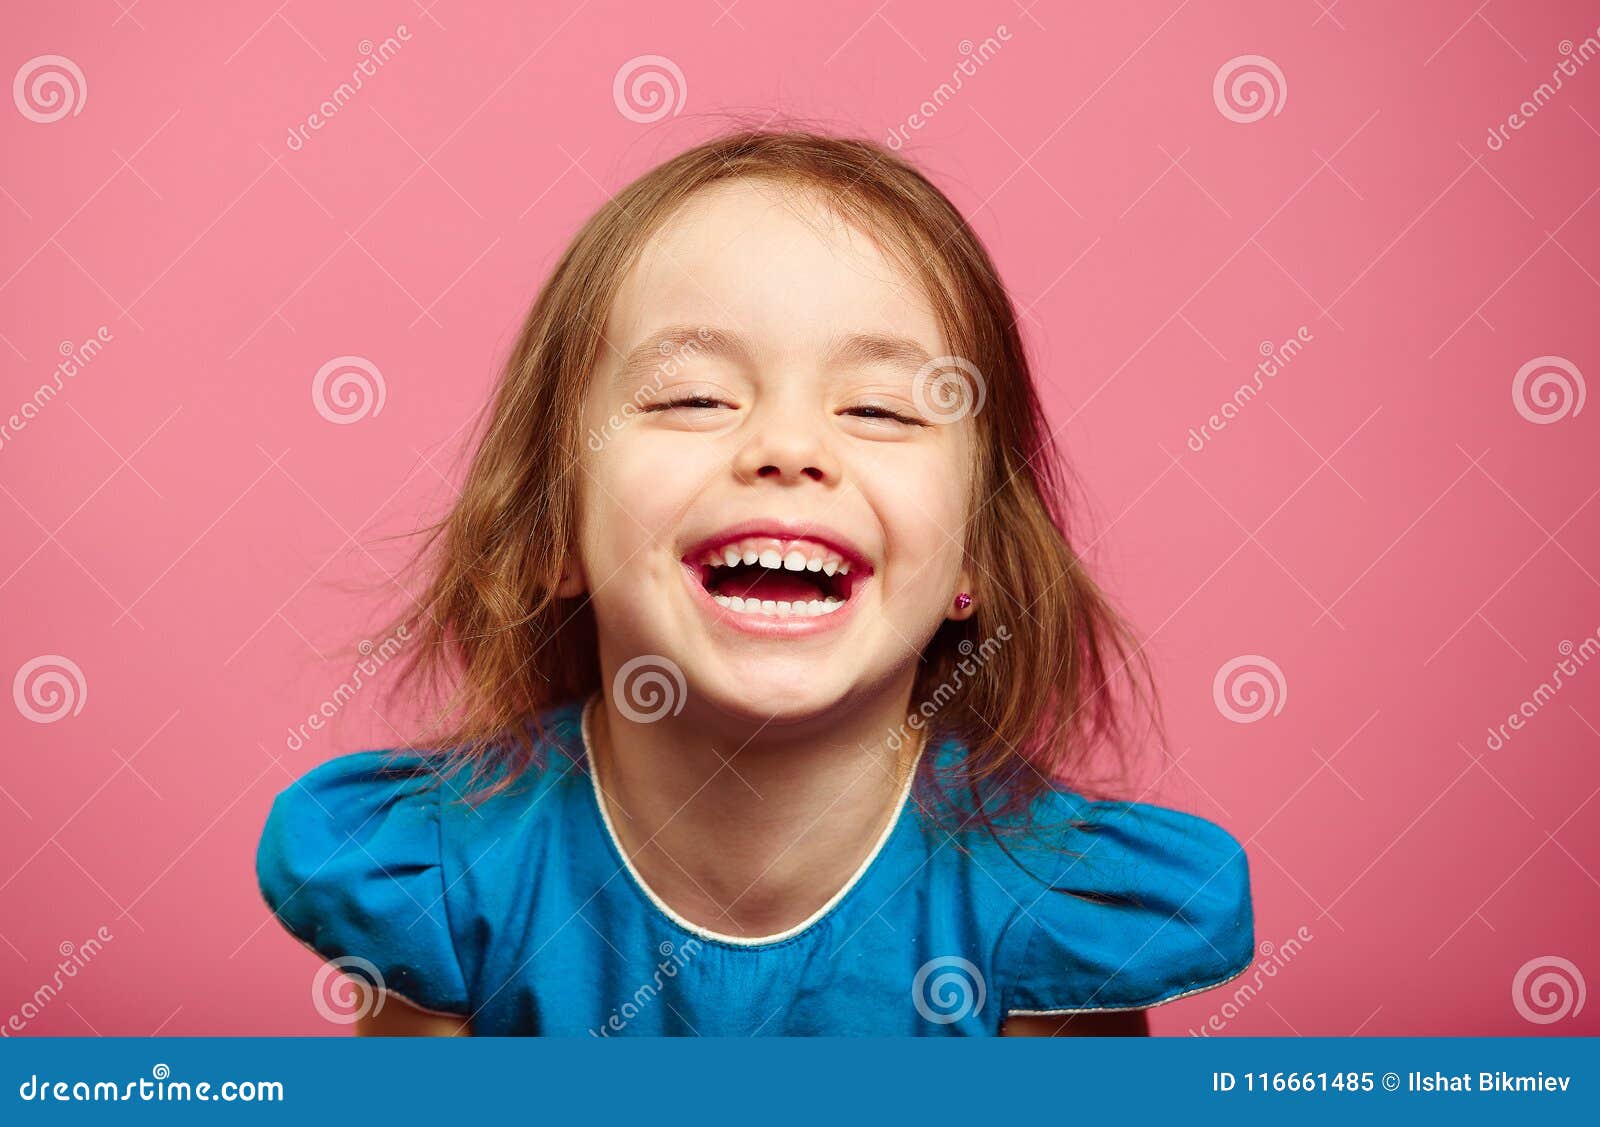 frontal shot of laughter joyful little girl stands beside pink wall.